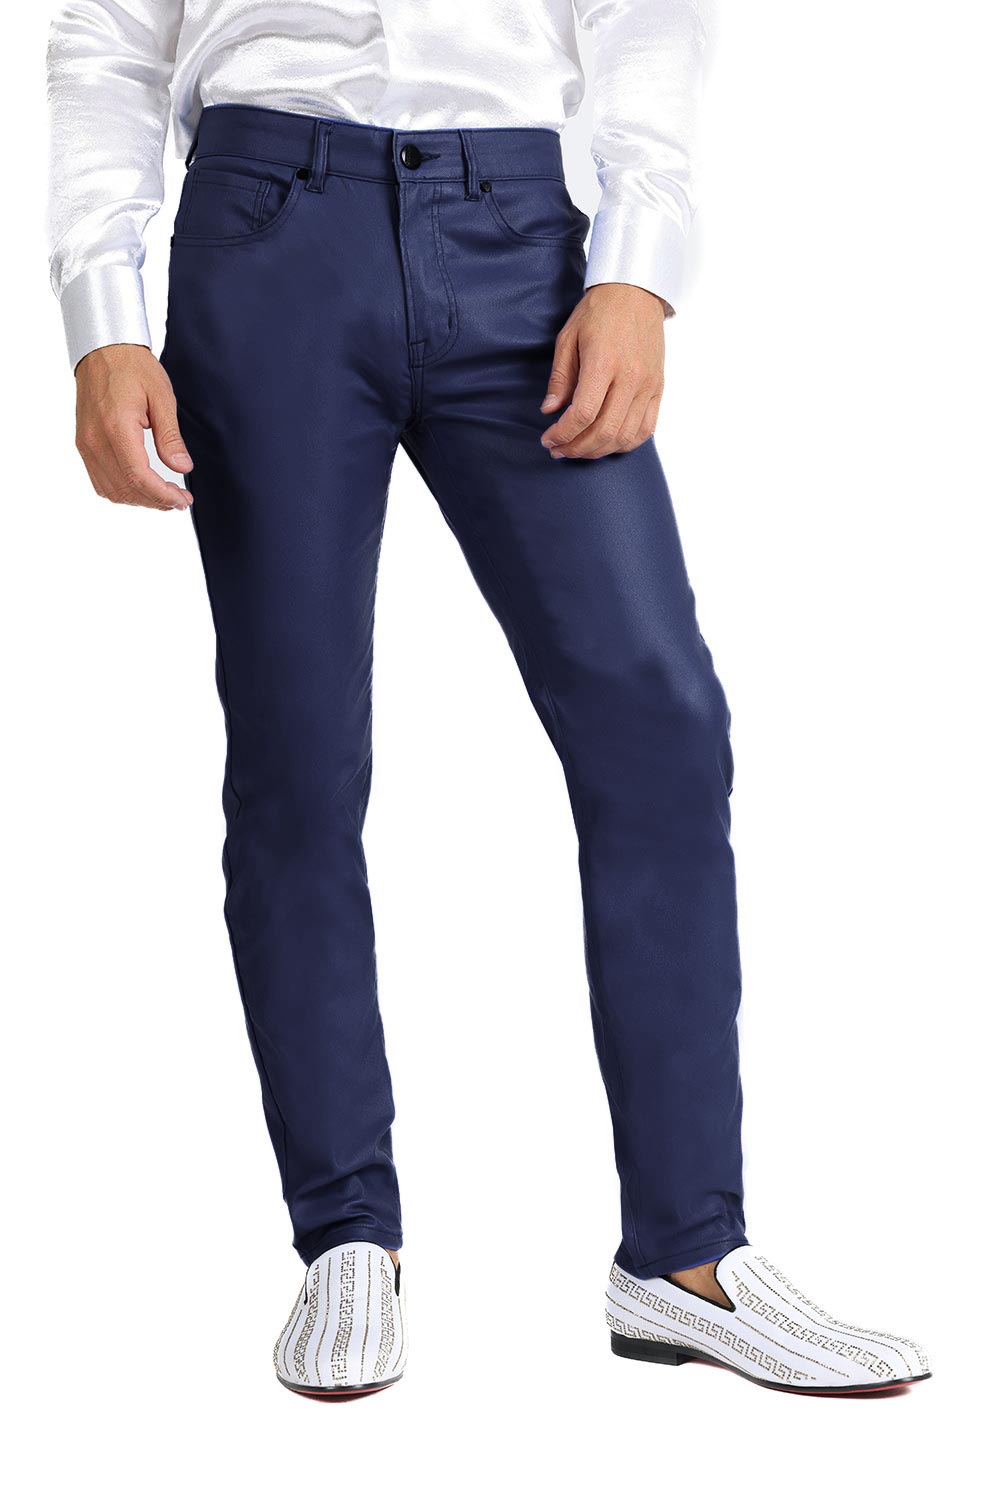 Barabas Men's Glossy Shiny Design Sparkly Luxury Dress Pants 2CPW27 Glitter Navy